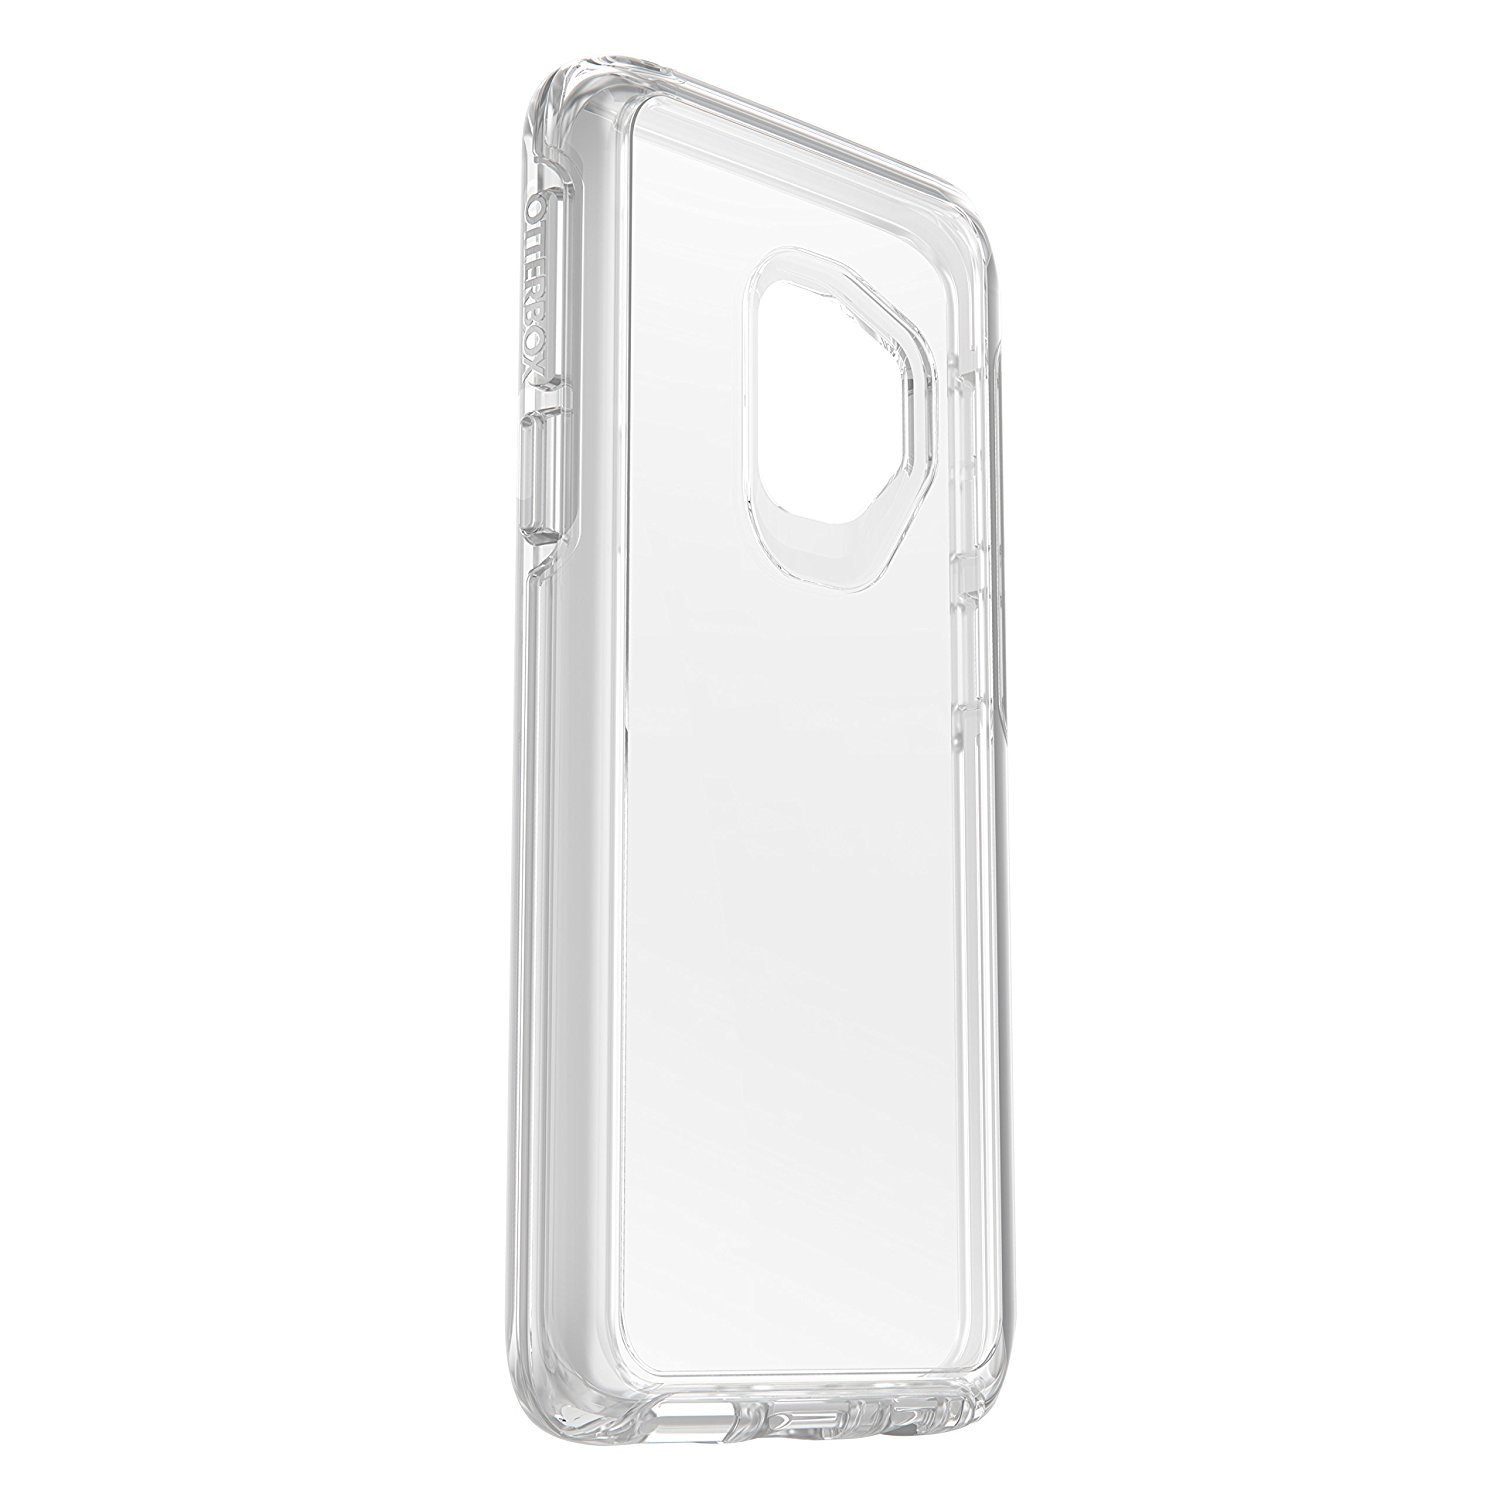 OtterBox Symmetry Clear Samsung Galaxy S9 Case - Clear